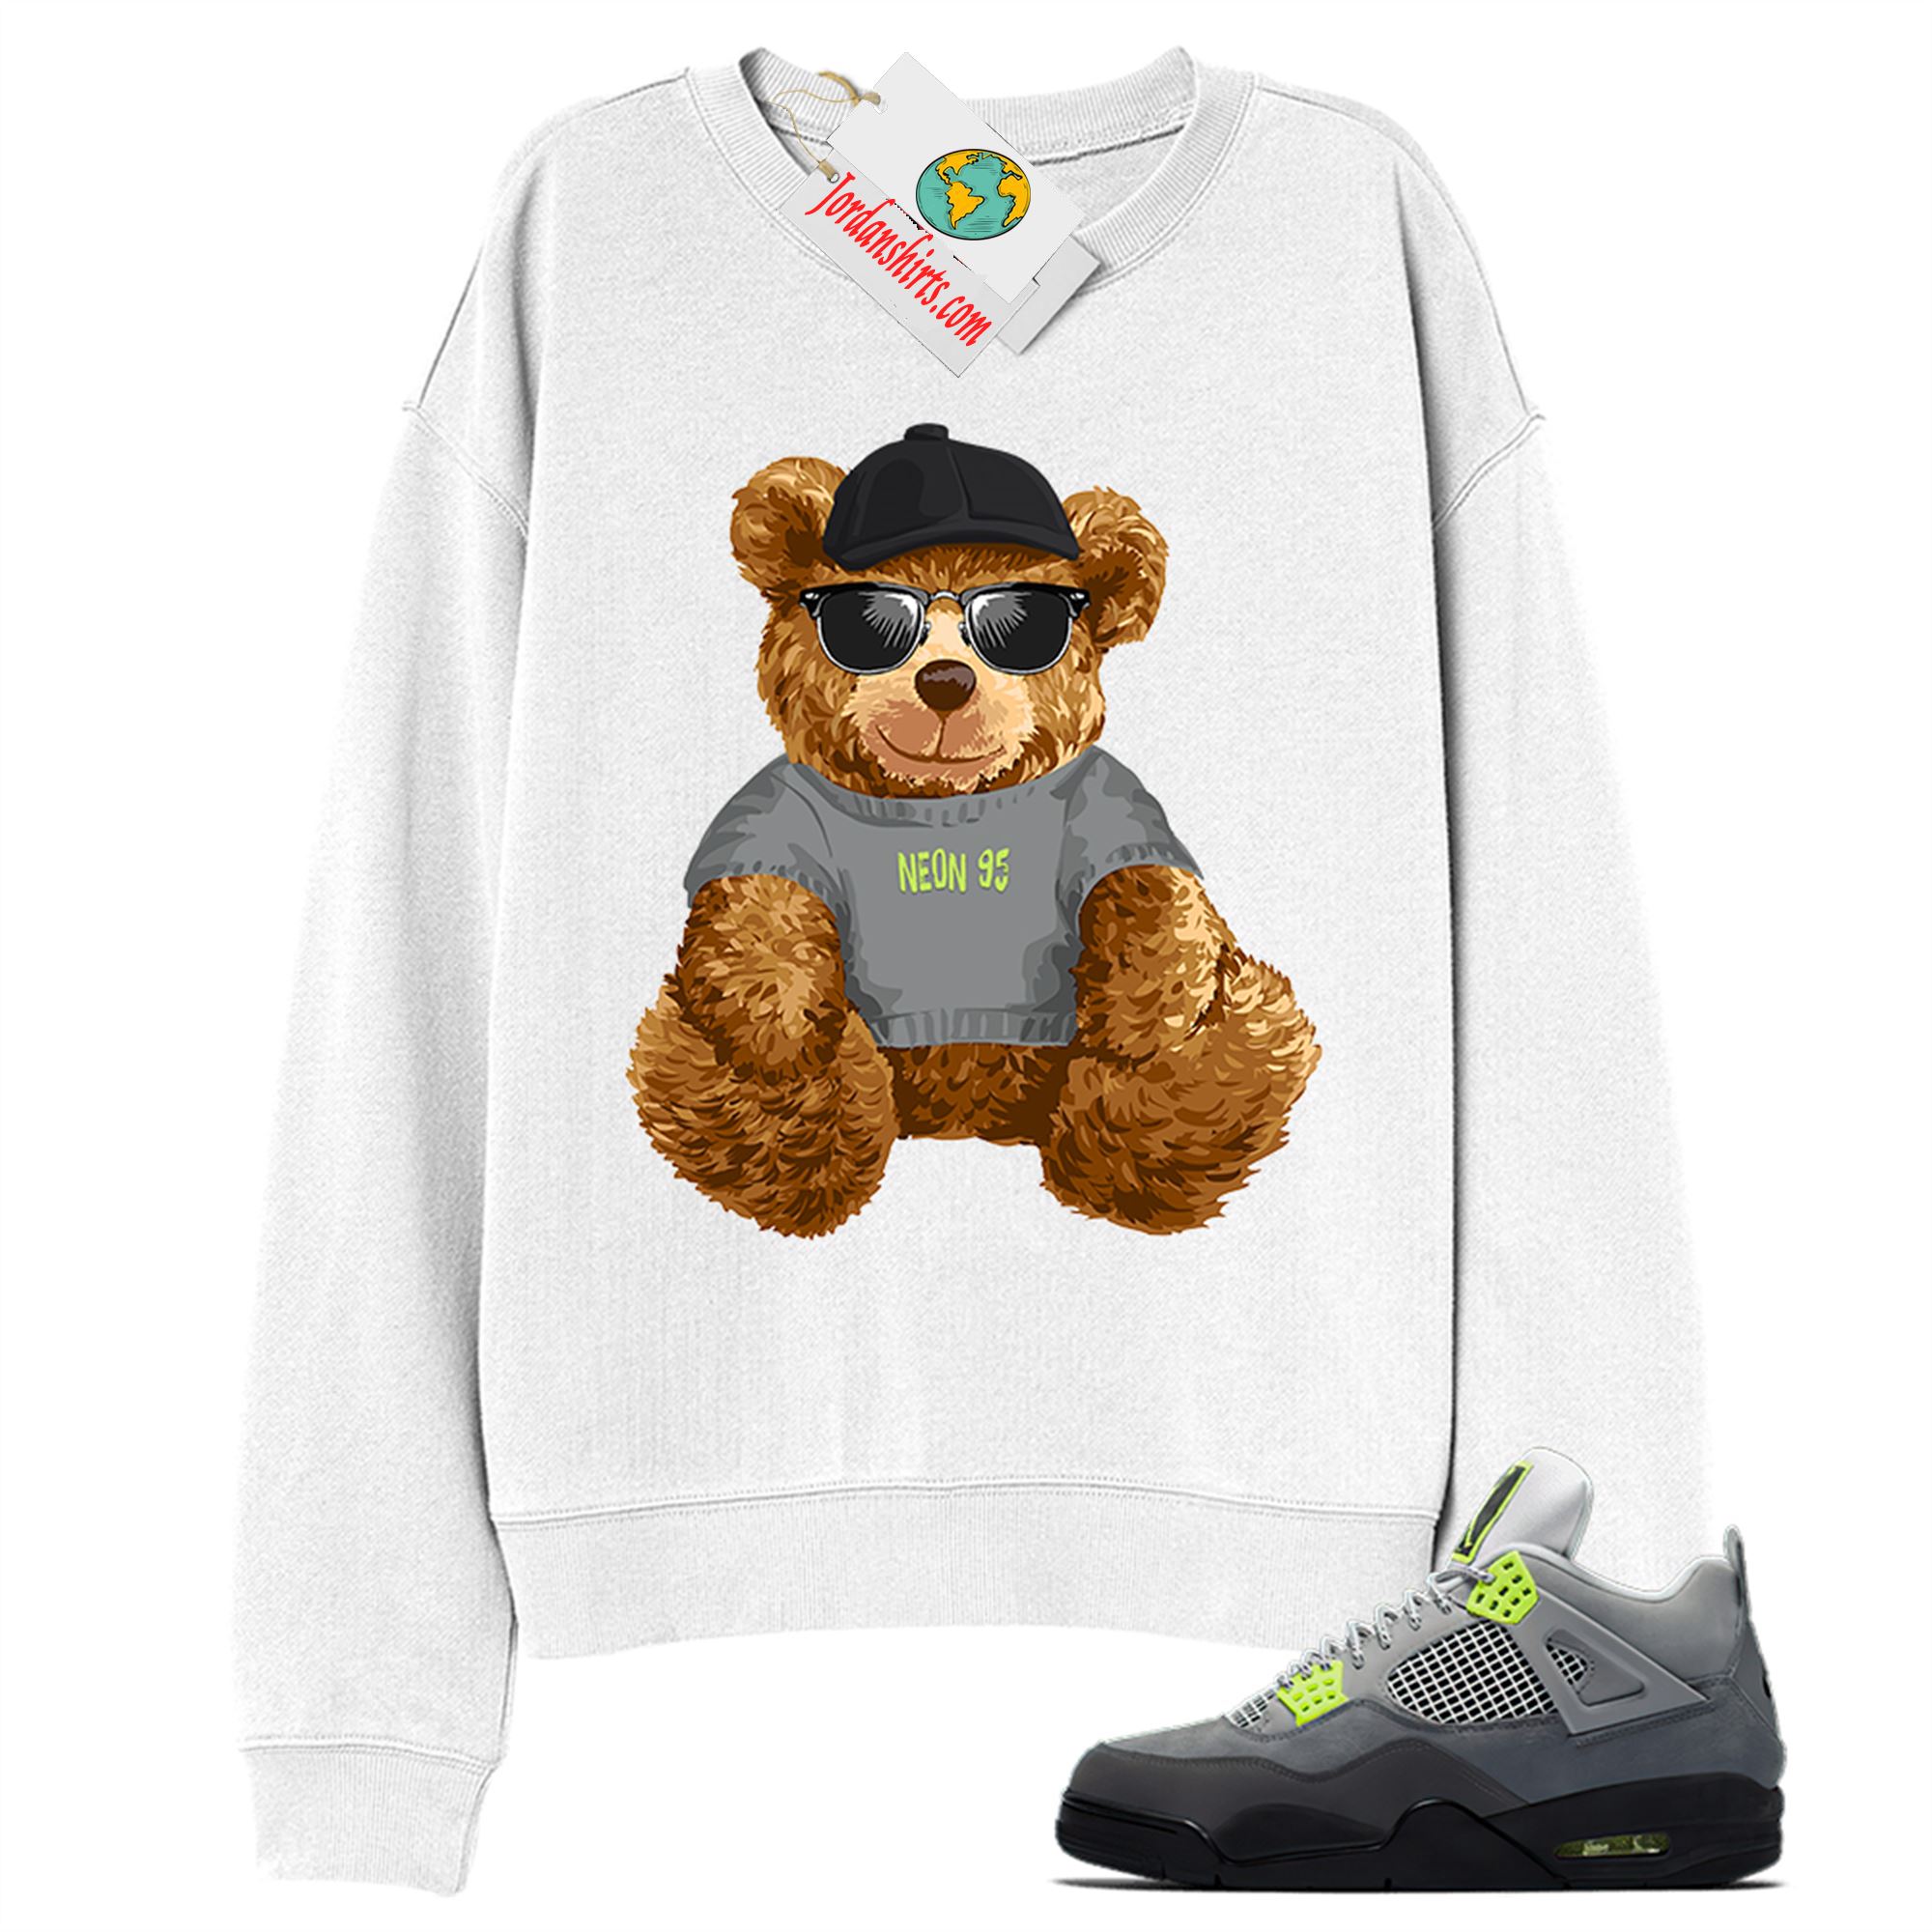 Jordan 4 Sweatshirt, Teddy Bear With Sunglasses Hat White Sweatshirt Air Jordan 4 Neon 95 4s Full Size Up To 5xl